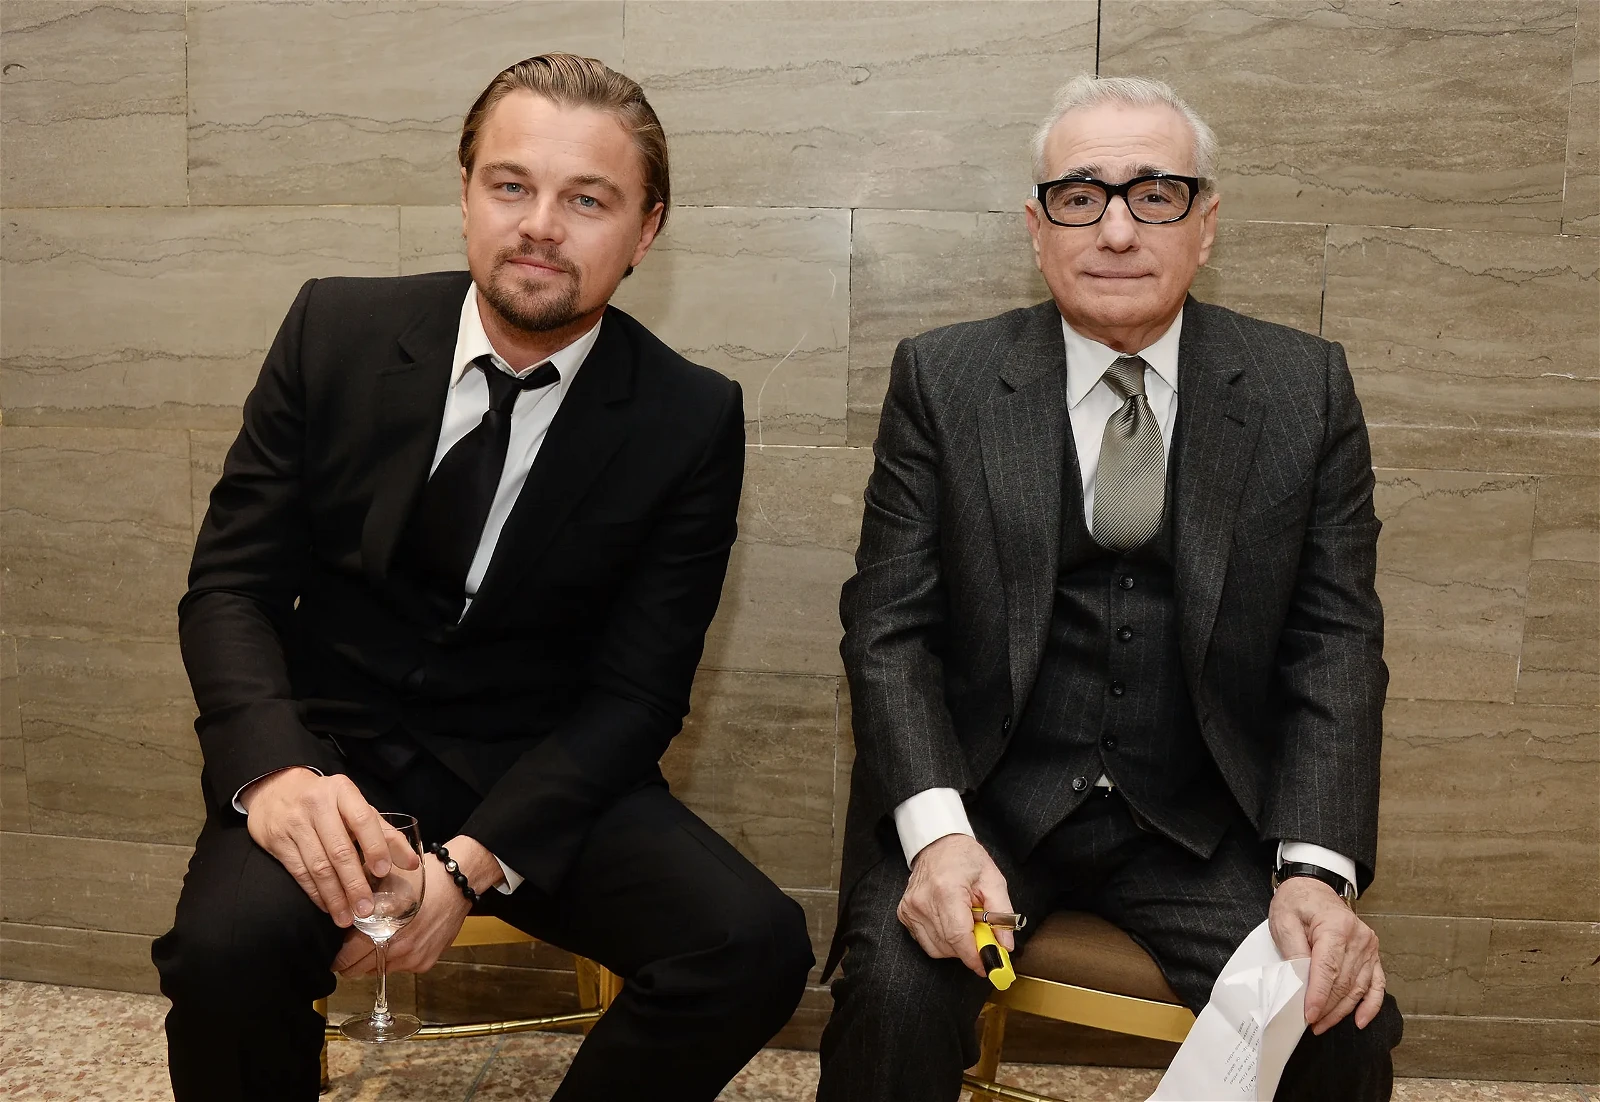 Martin Scorsese and Leonardo DiCaprio.